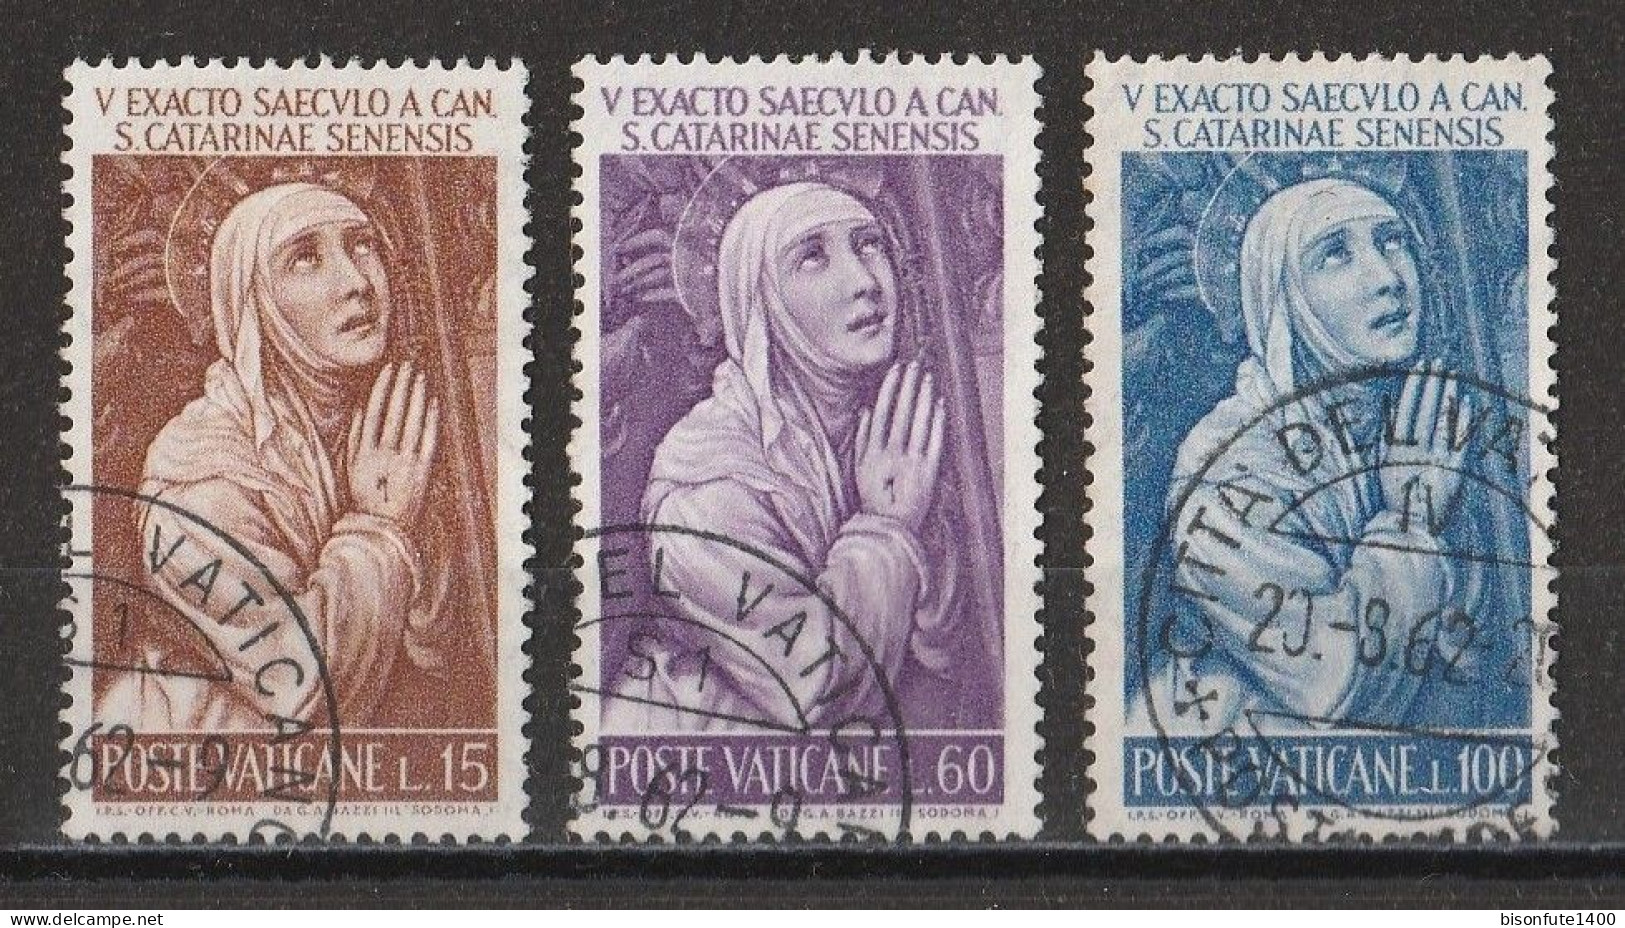 Vatican 1962 : Timbres Yvert & Tellier N° 344 - 348 - 349 - 350 - 351 - 352 - 353 - 354 Et 355 Oblitérés. - Usados